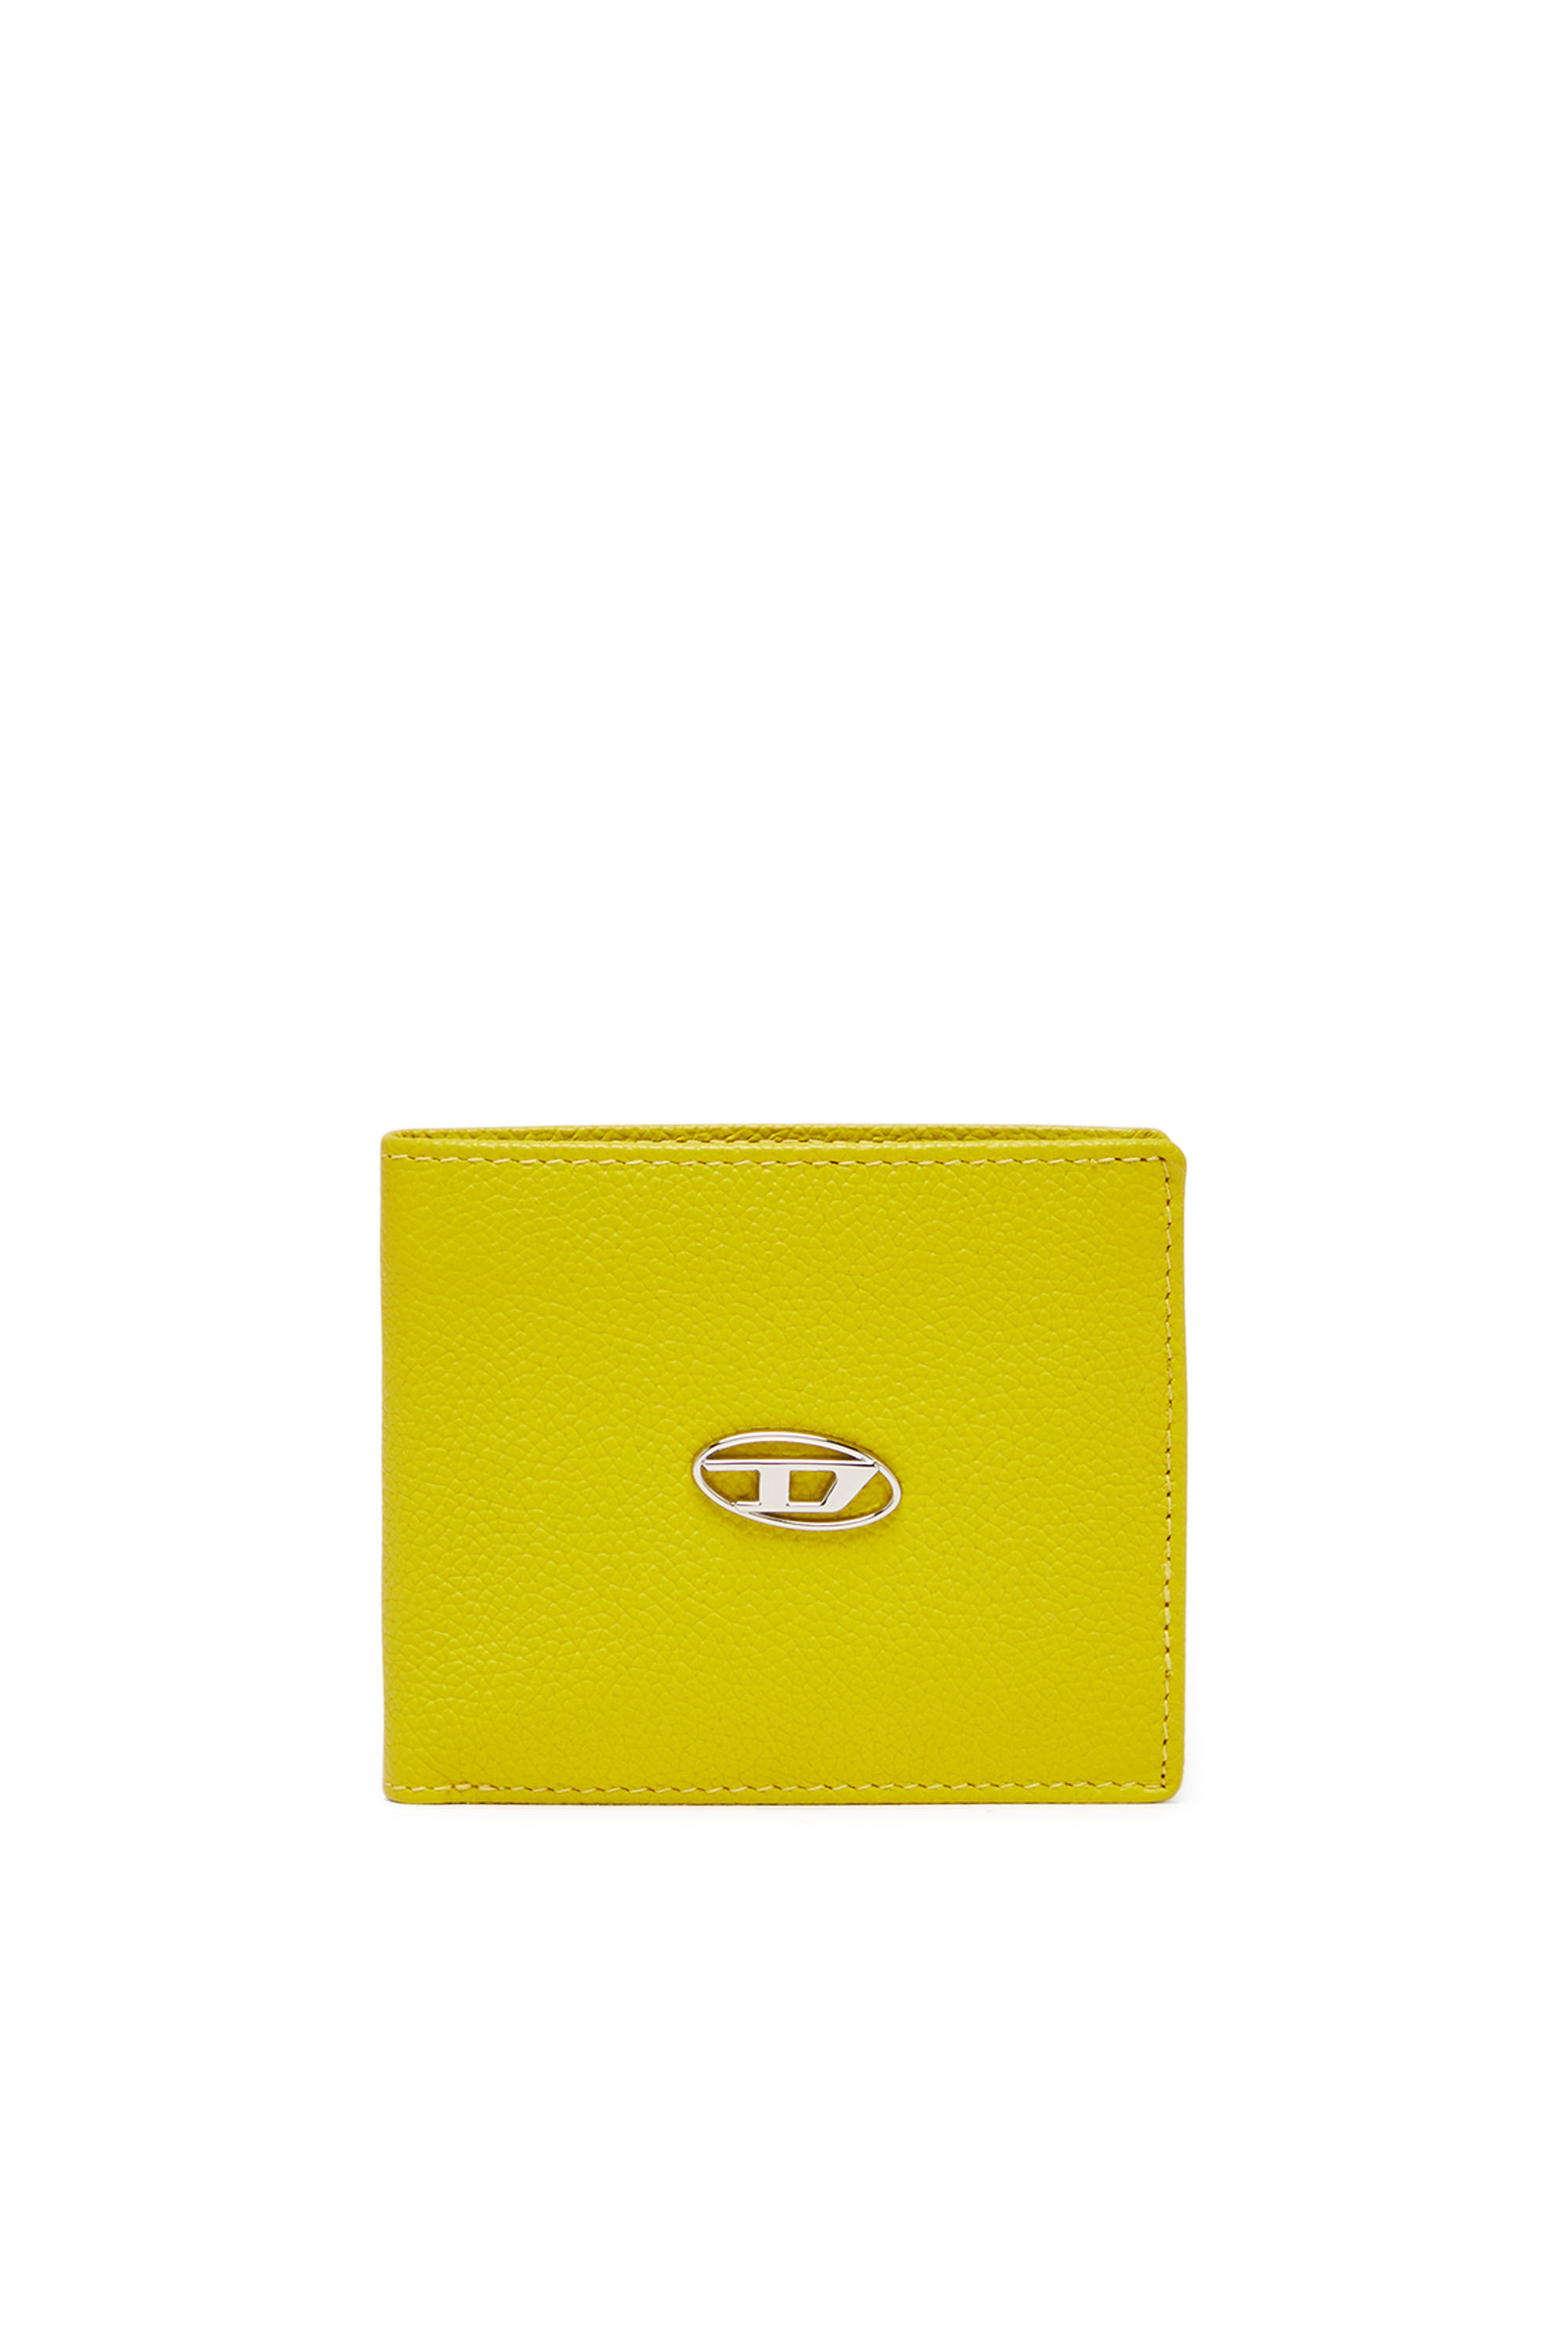 Diesel - BI FOLD COIN S, Man Bi-fold wallet in grainy leather in Yellow - Image 1